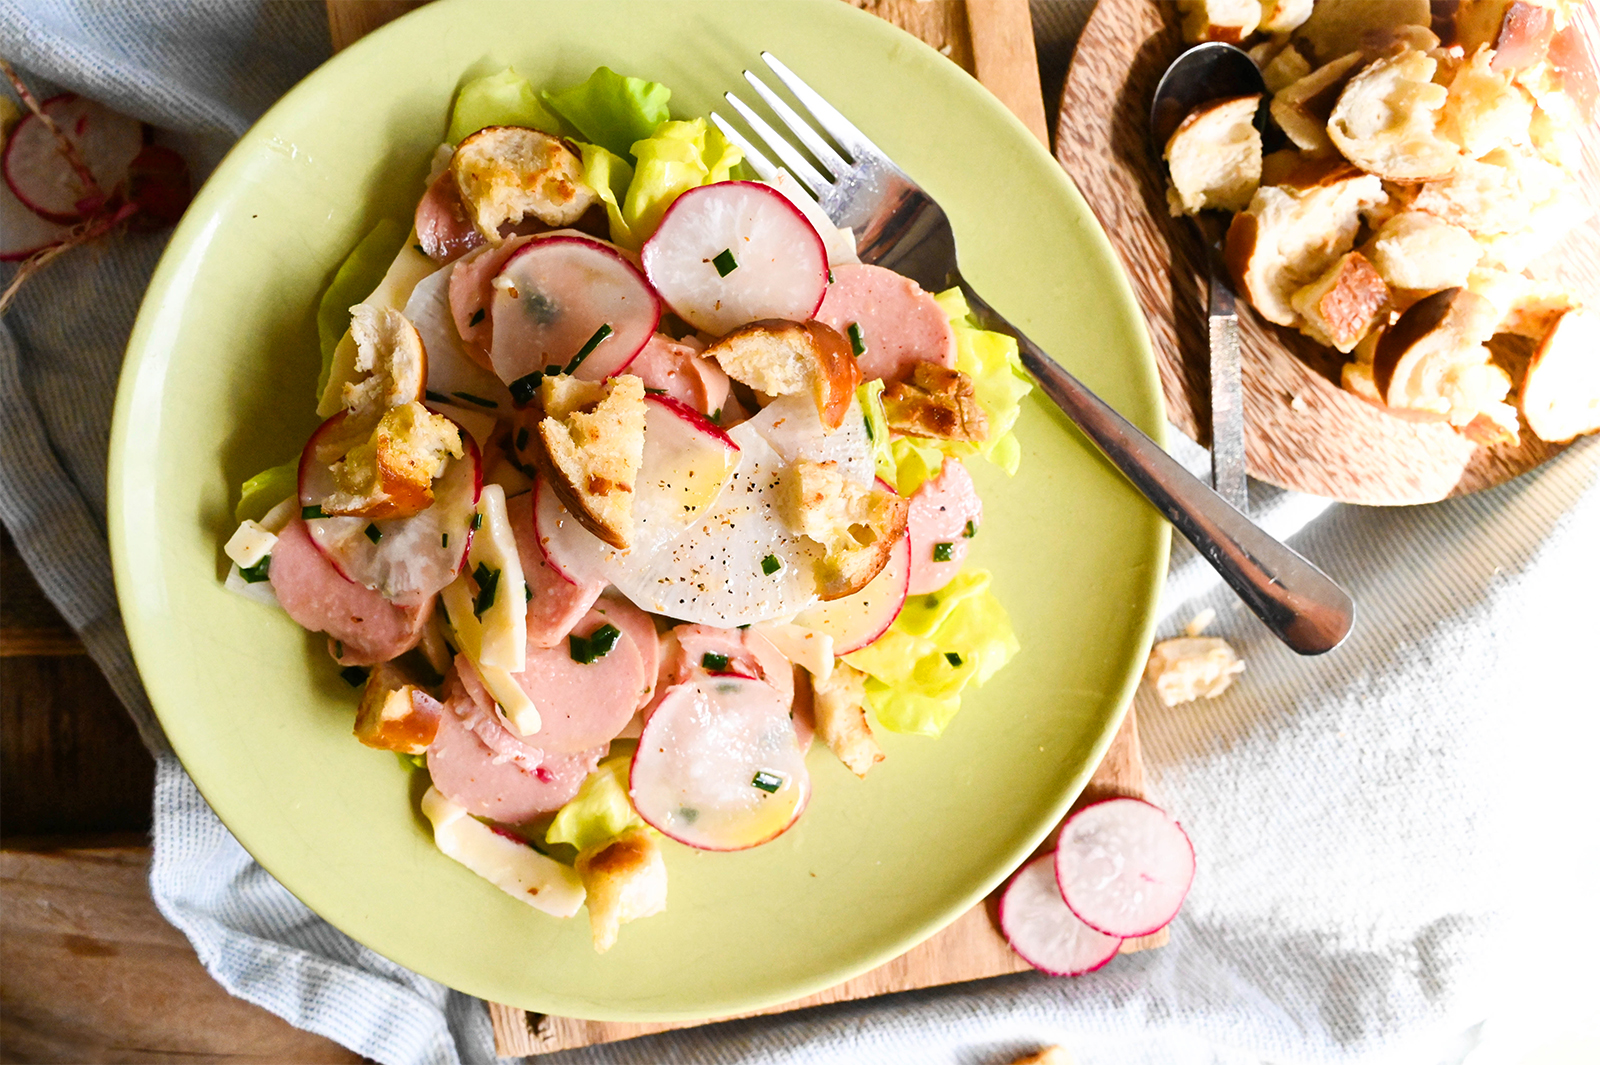 Wurst-Käse-Salat mit Bierrettich und warmen Brezen-Würfeln